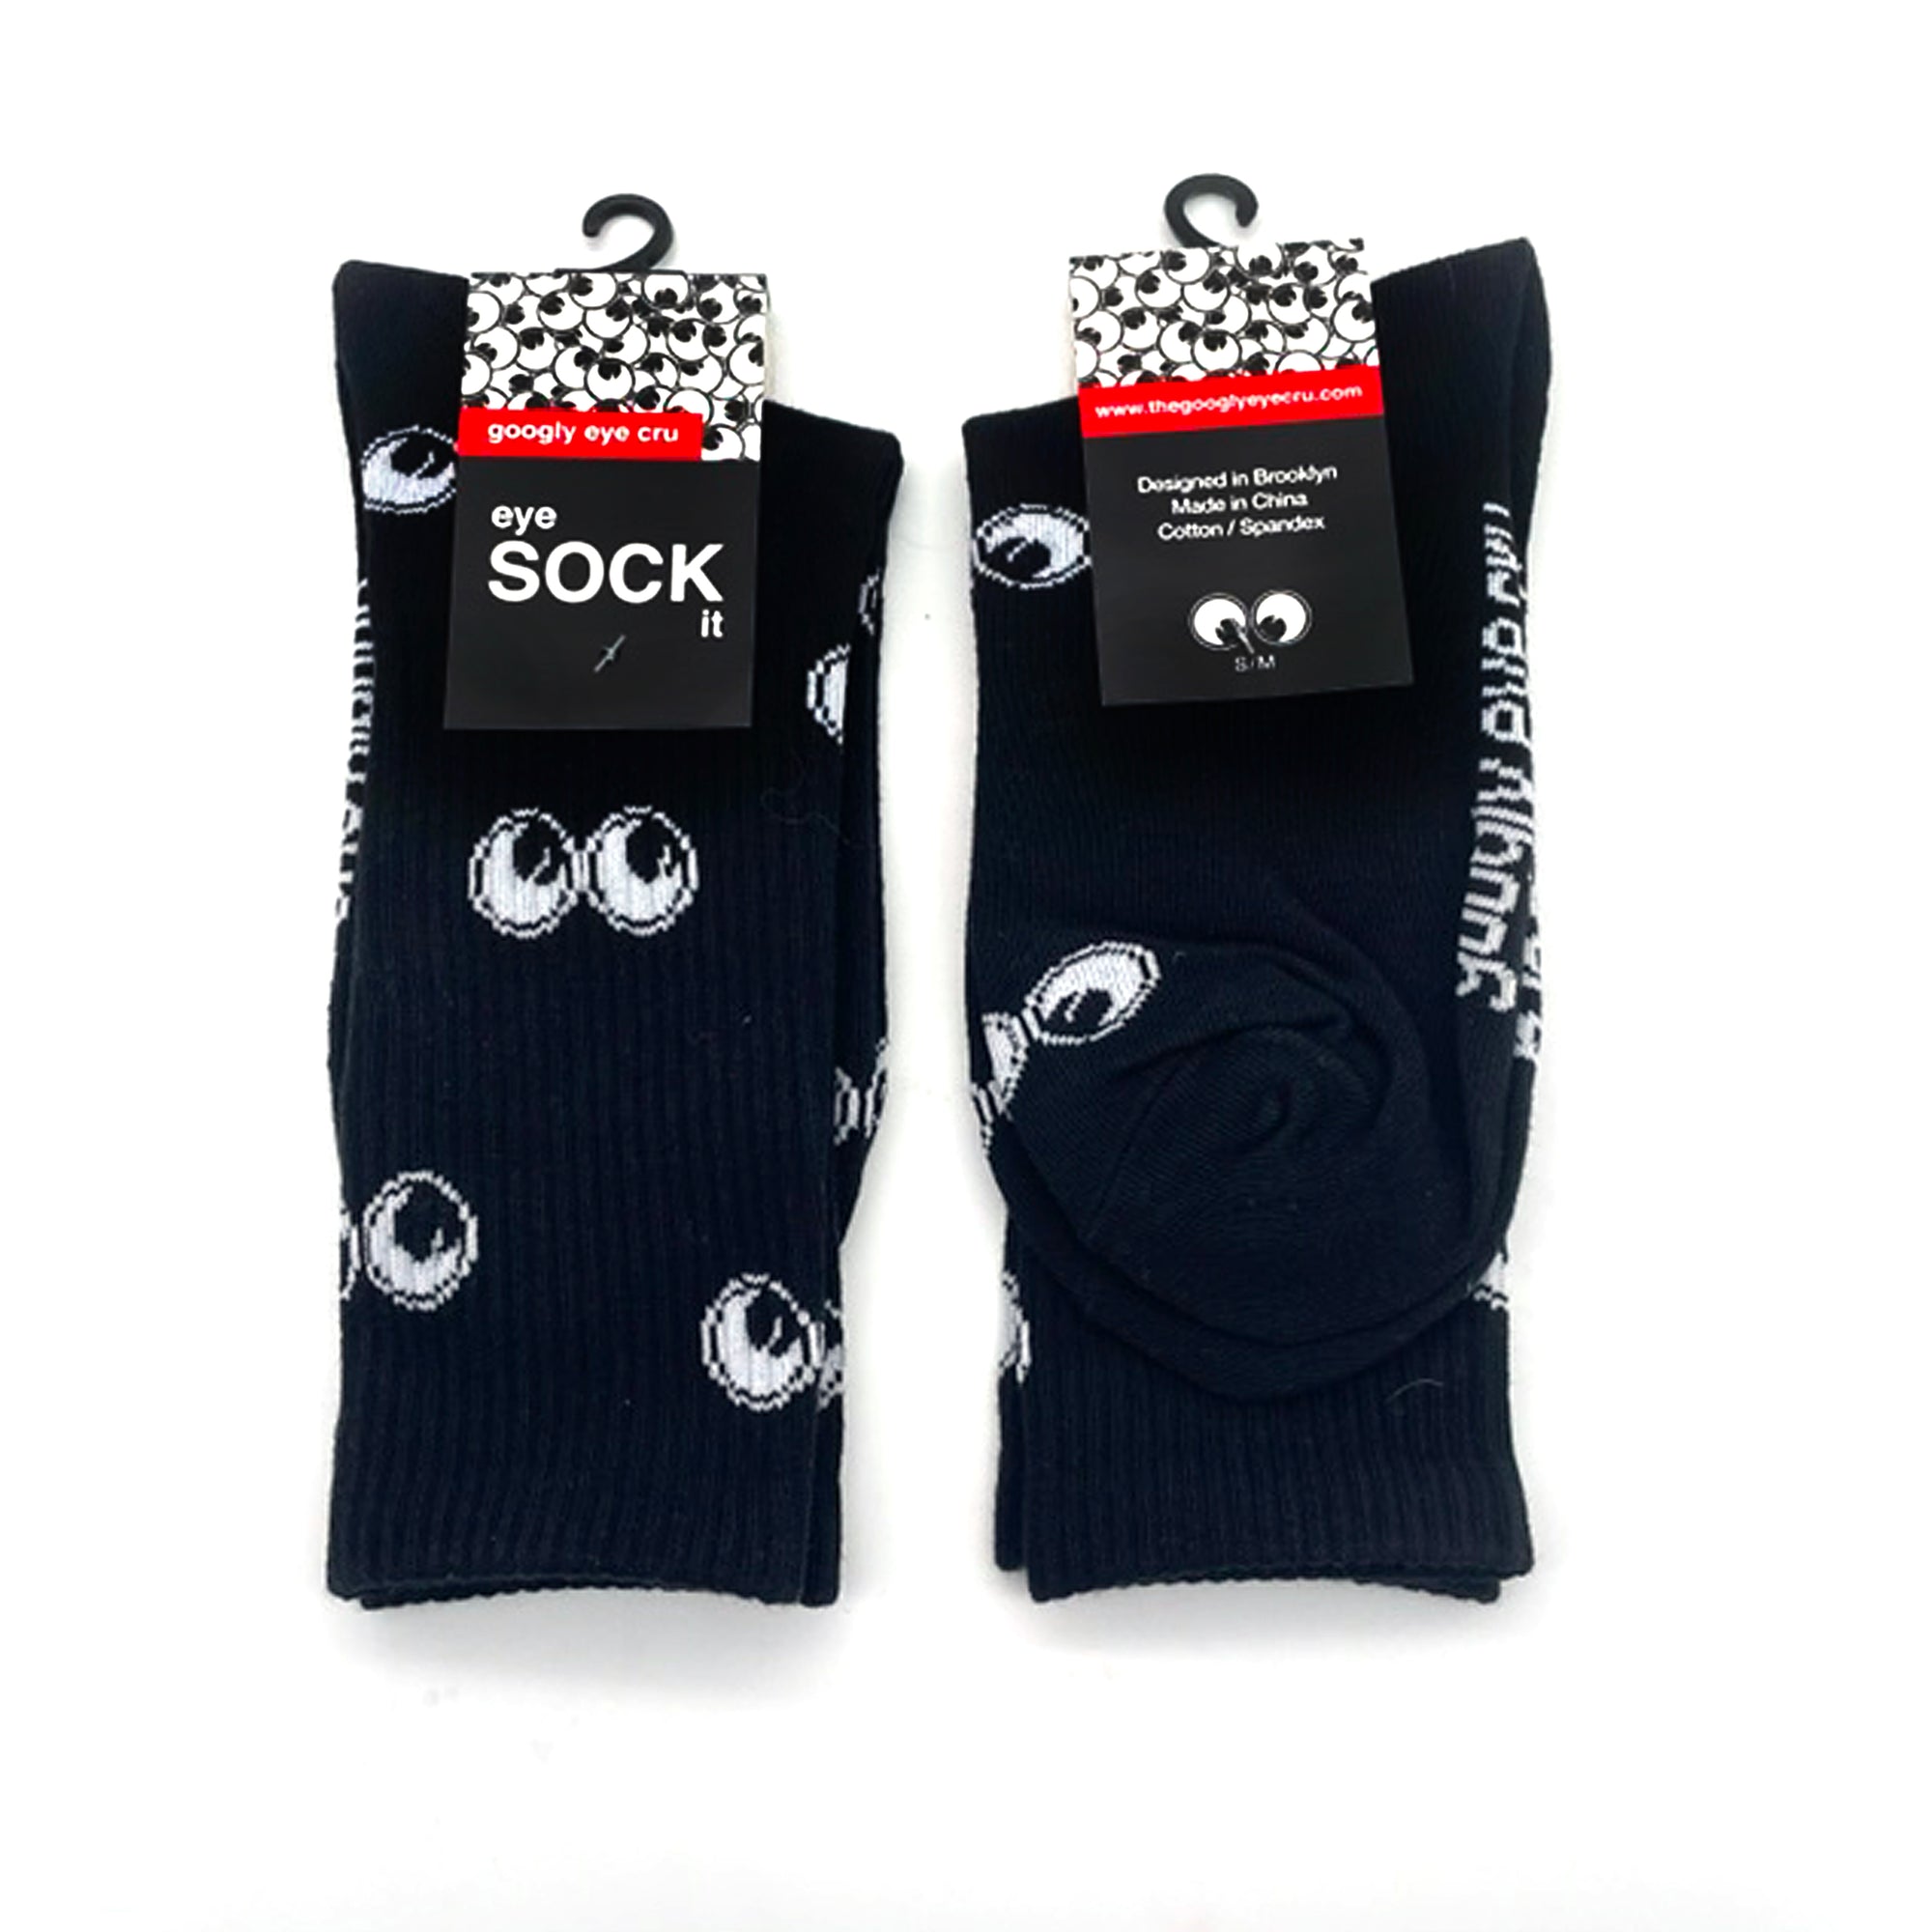 SOCKS: All eyes on me Socks